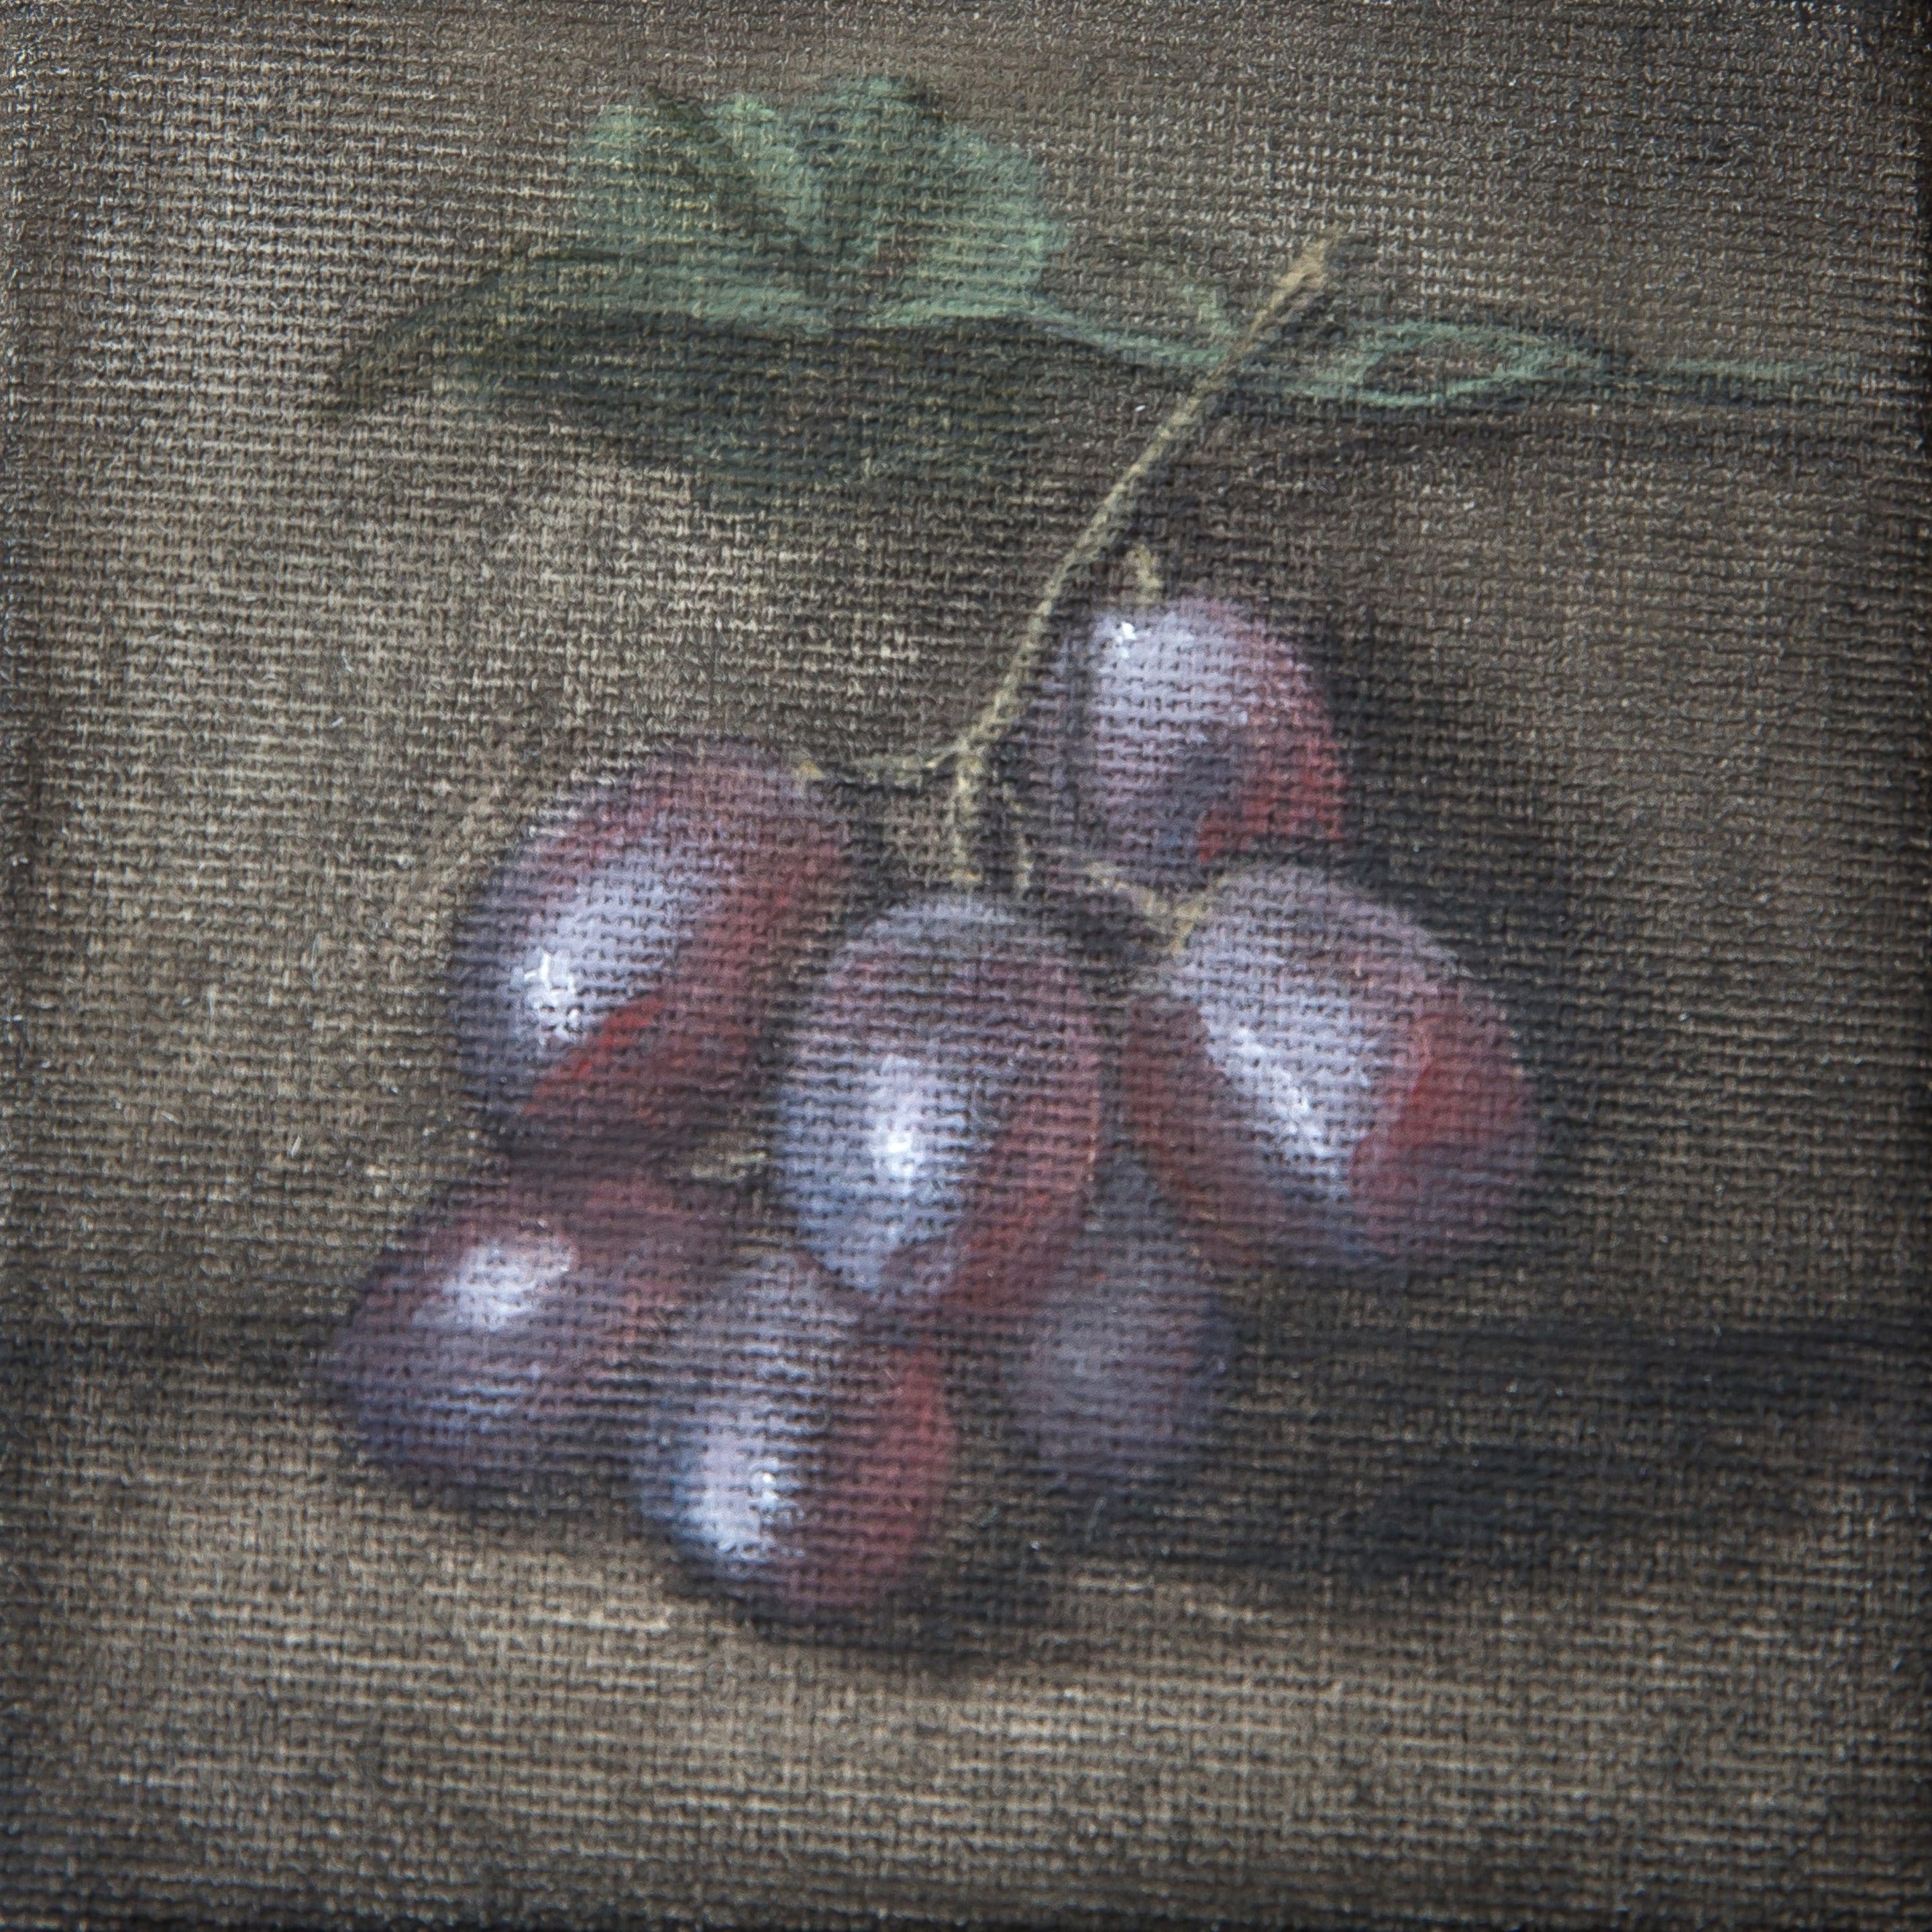 Fruit of the Vine - Renata Grzan Wieczorek